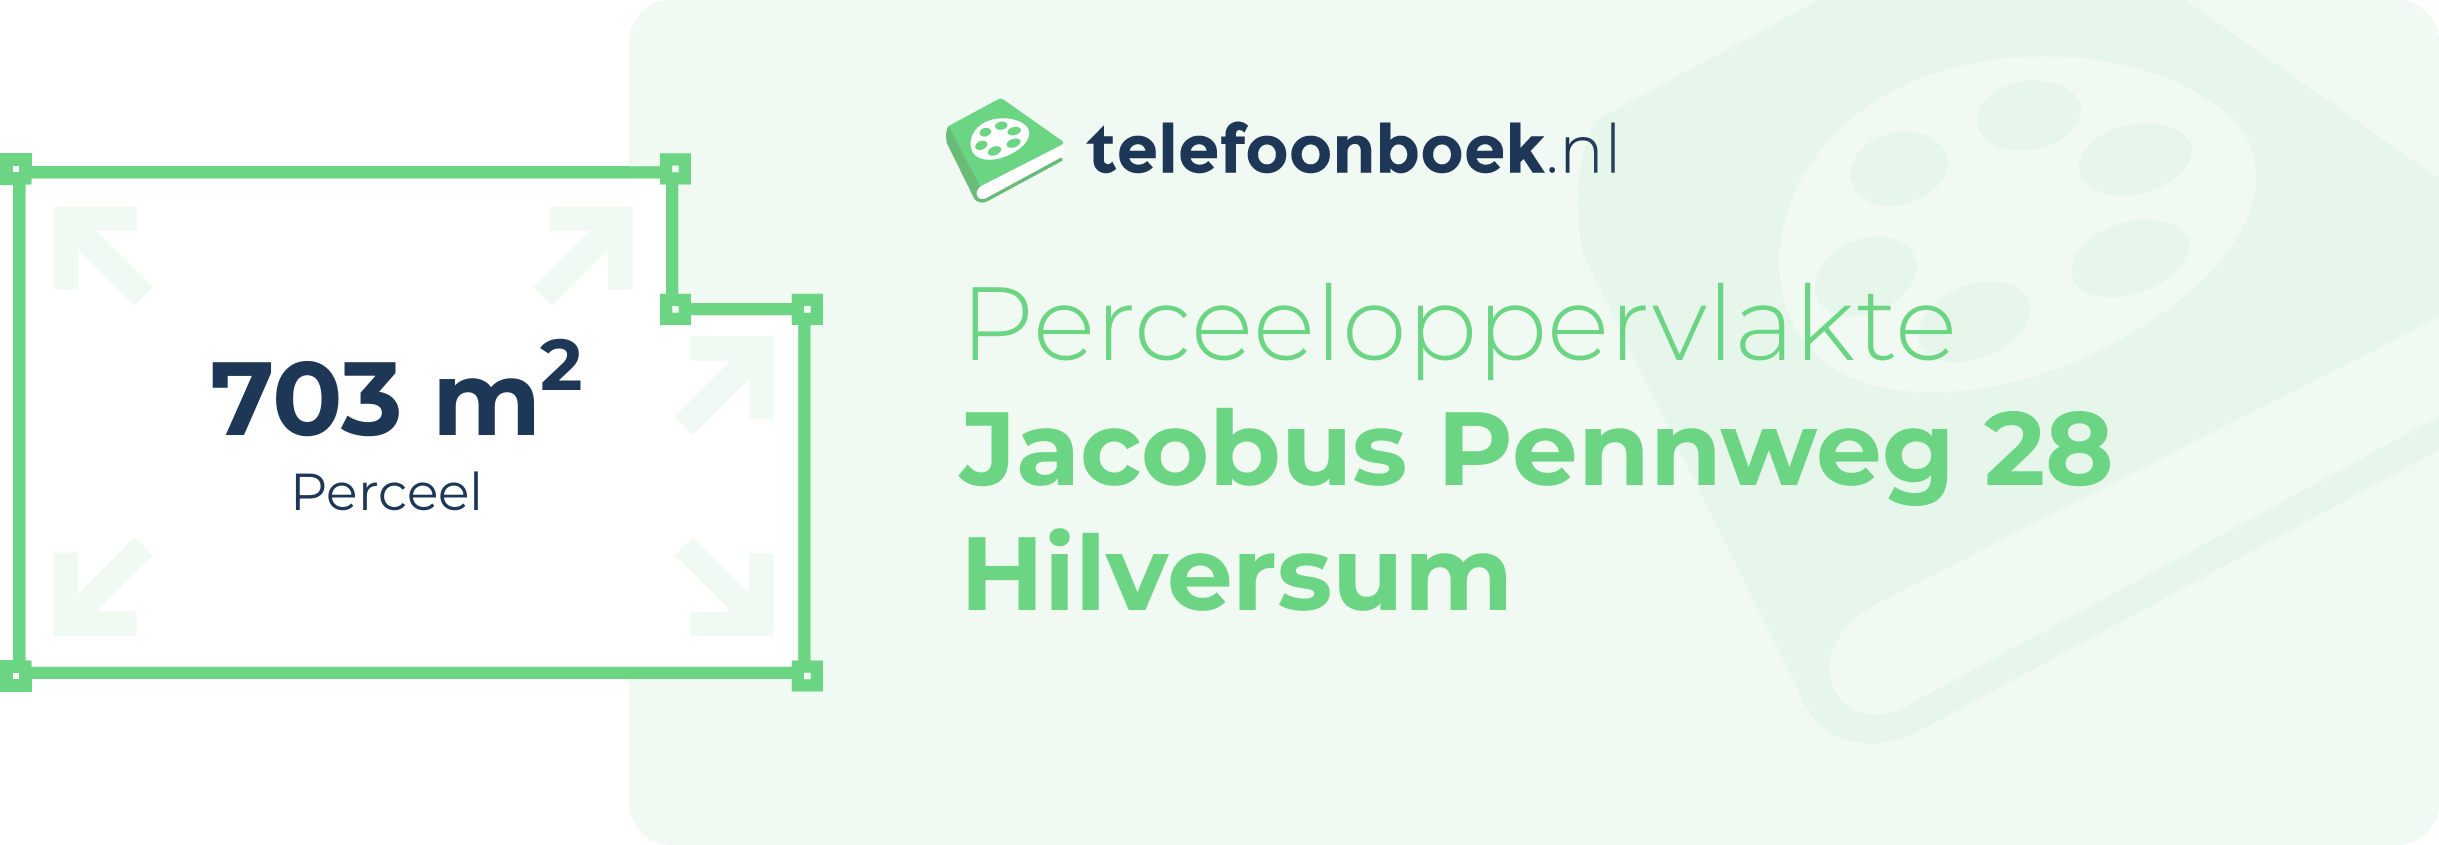 Perceeloppervlakte Jacobus Pennweg 28 Hilversum